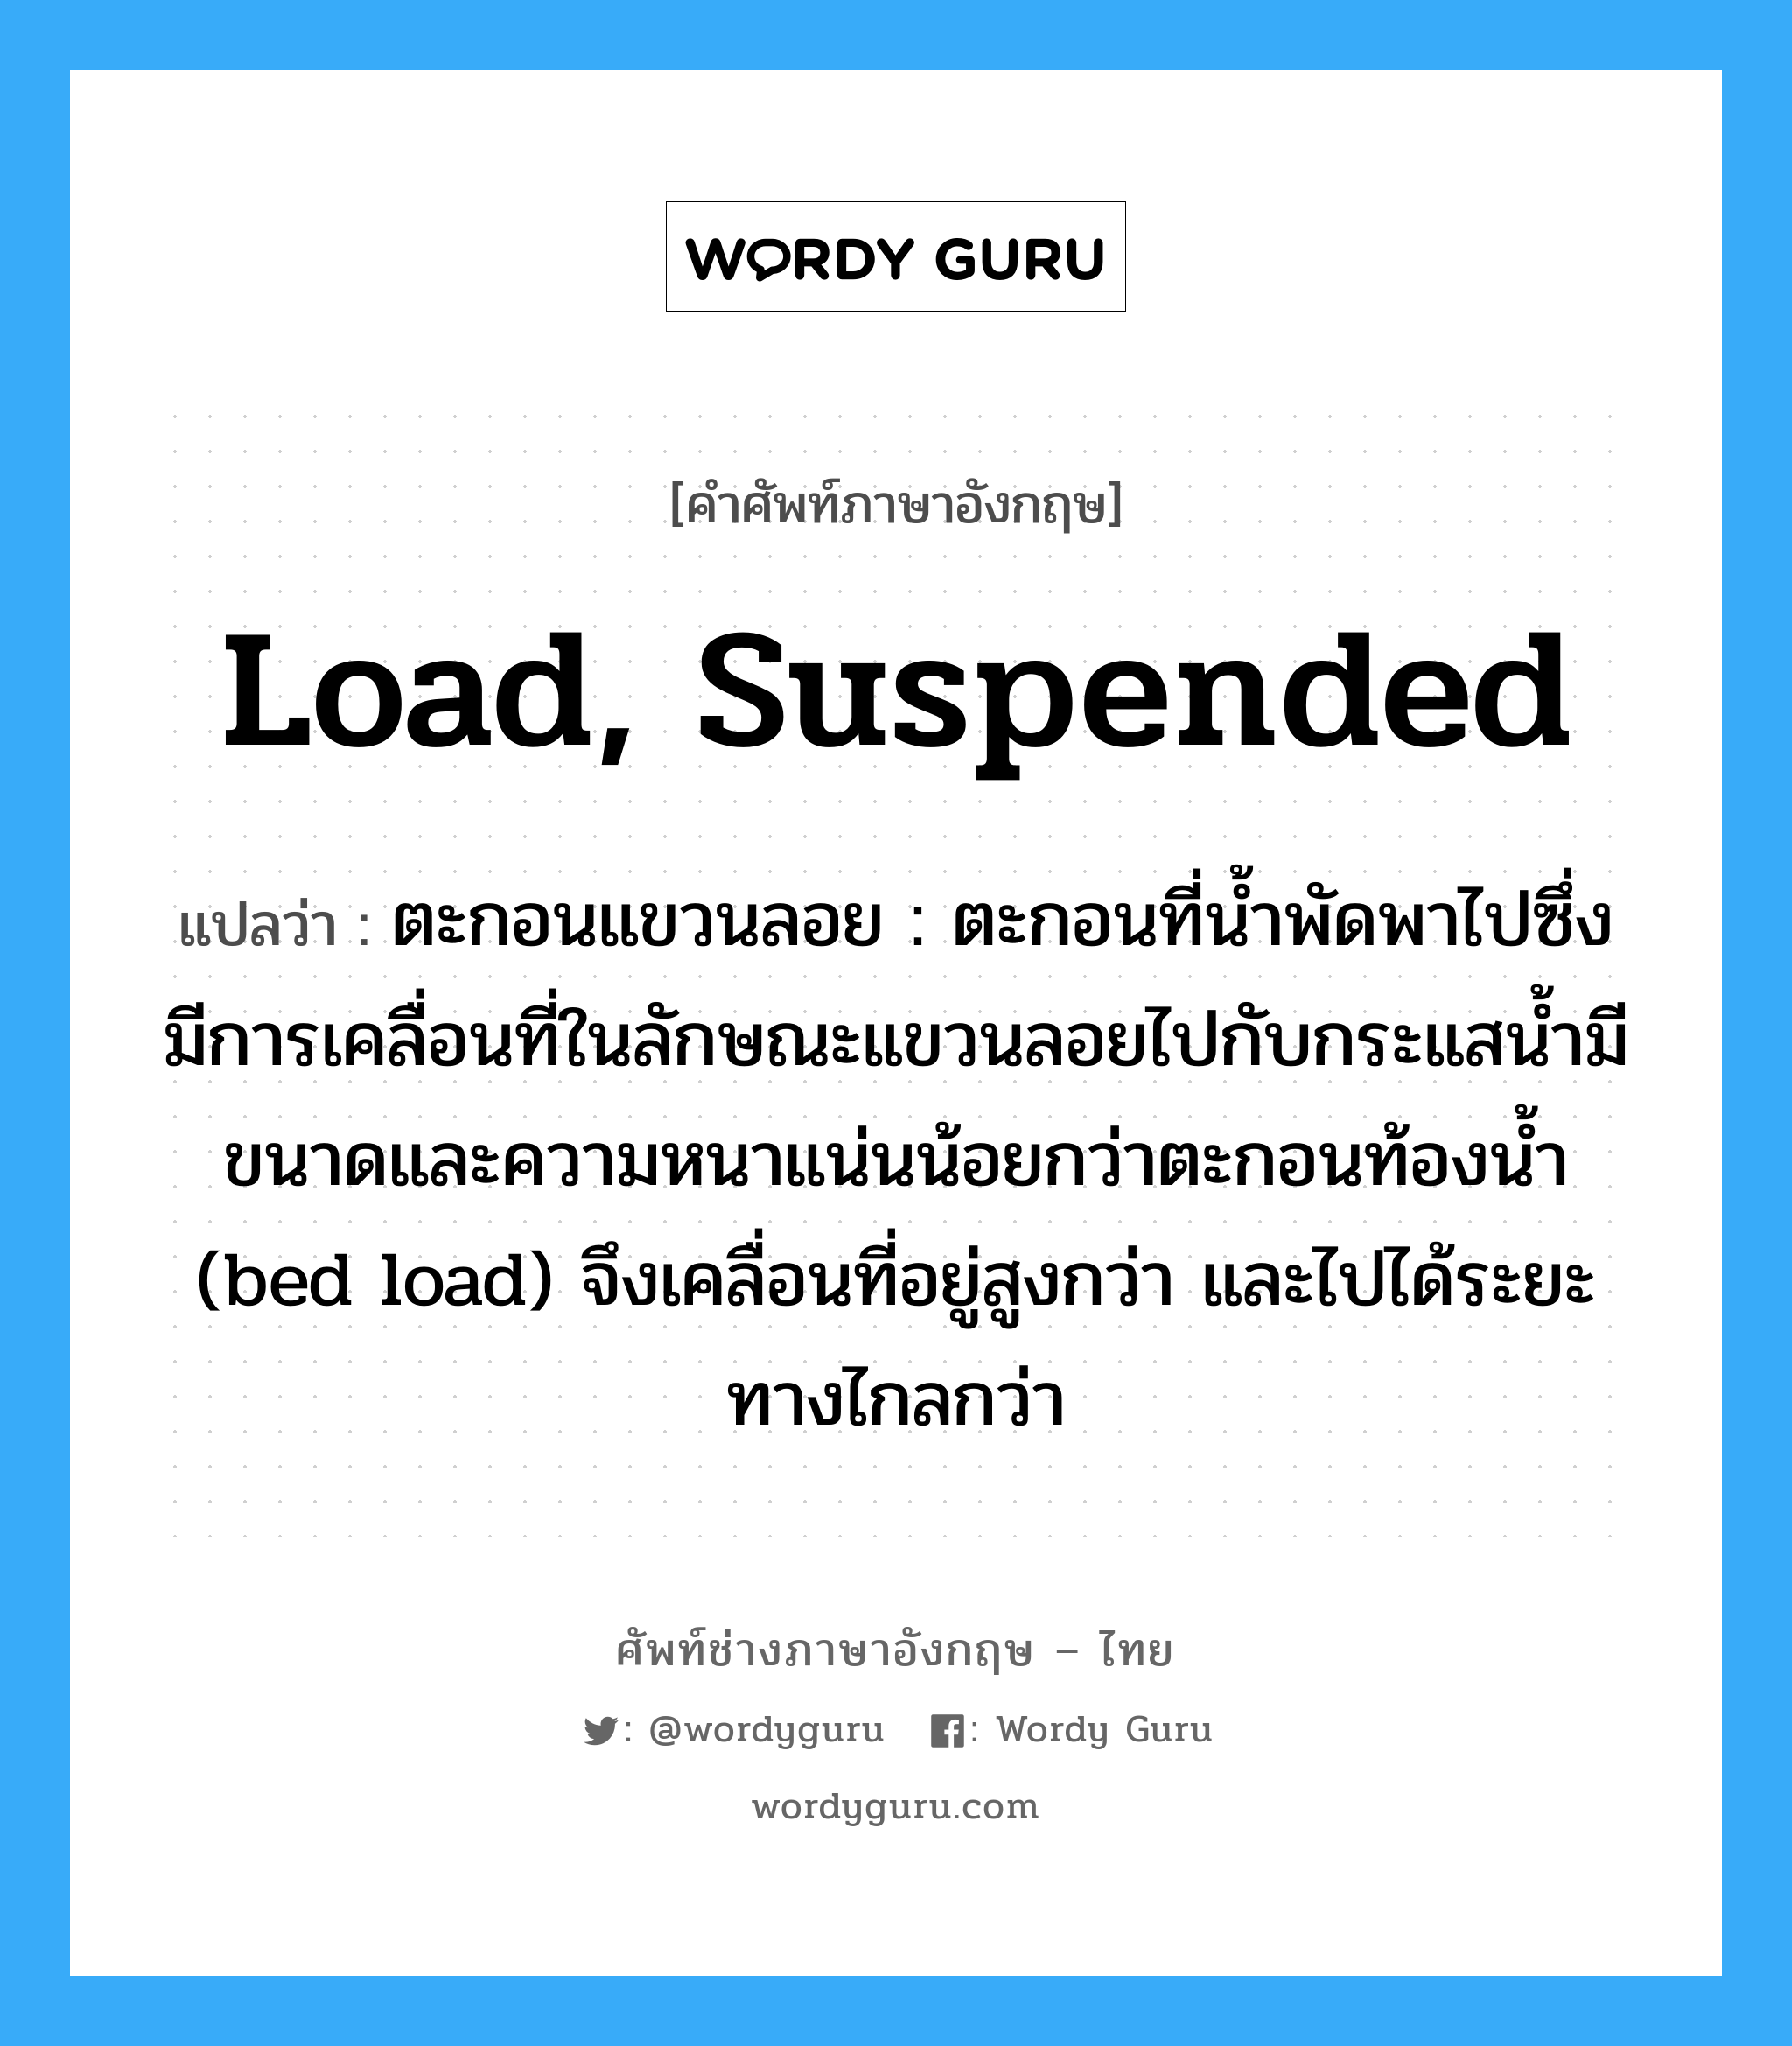 load, suspended แปลว่า?, คำศัพท์ช่างภาษาอังกฤษ - ไทย load, suspended คำศัพท์ภาษาอังกฤษ load, suspended แปลว่า ตะกอนแขวนลอย : ตะกอนที่น้ำพัดพาไปซึ่งมีการเคลื่อนที่ในลักษณะแขวนลอยไปกับกระแสน้ำมีขนาดและความหนาแน่นน้อยกว่าตะกอนท้องน้ำ (bed load) จึงเคลื่อนที่อยู่สูงกว่า และไปได้ระยะทางไกลกว่า